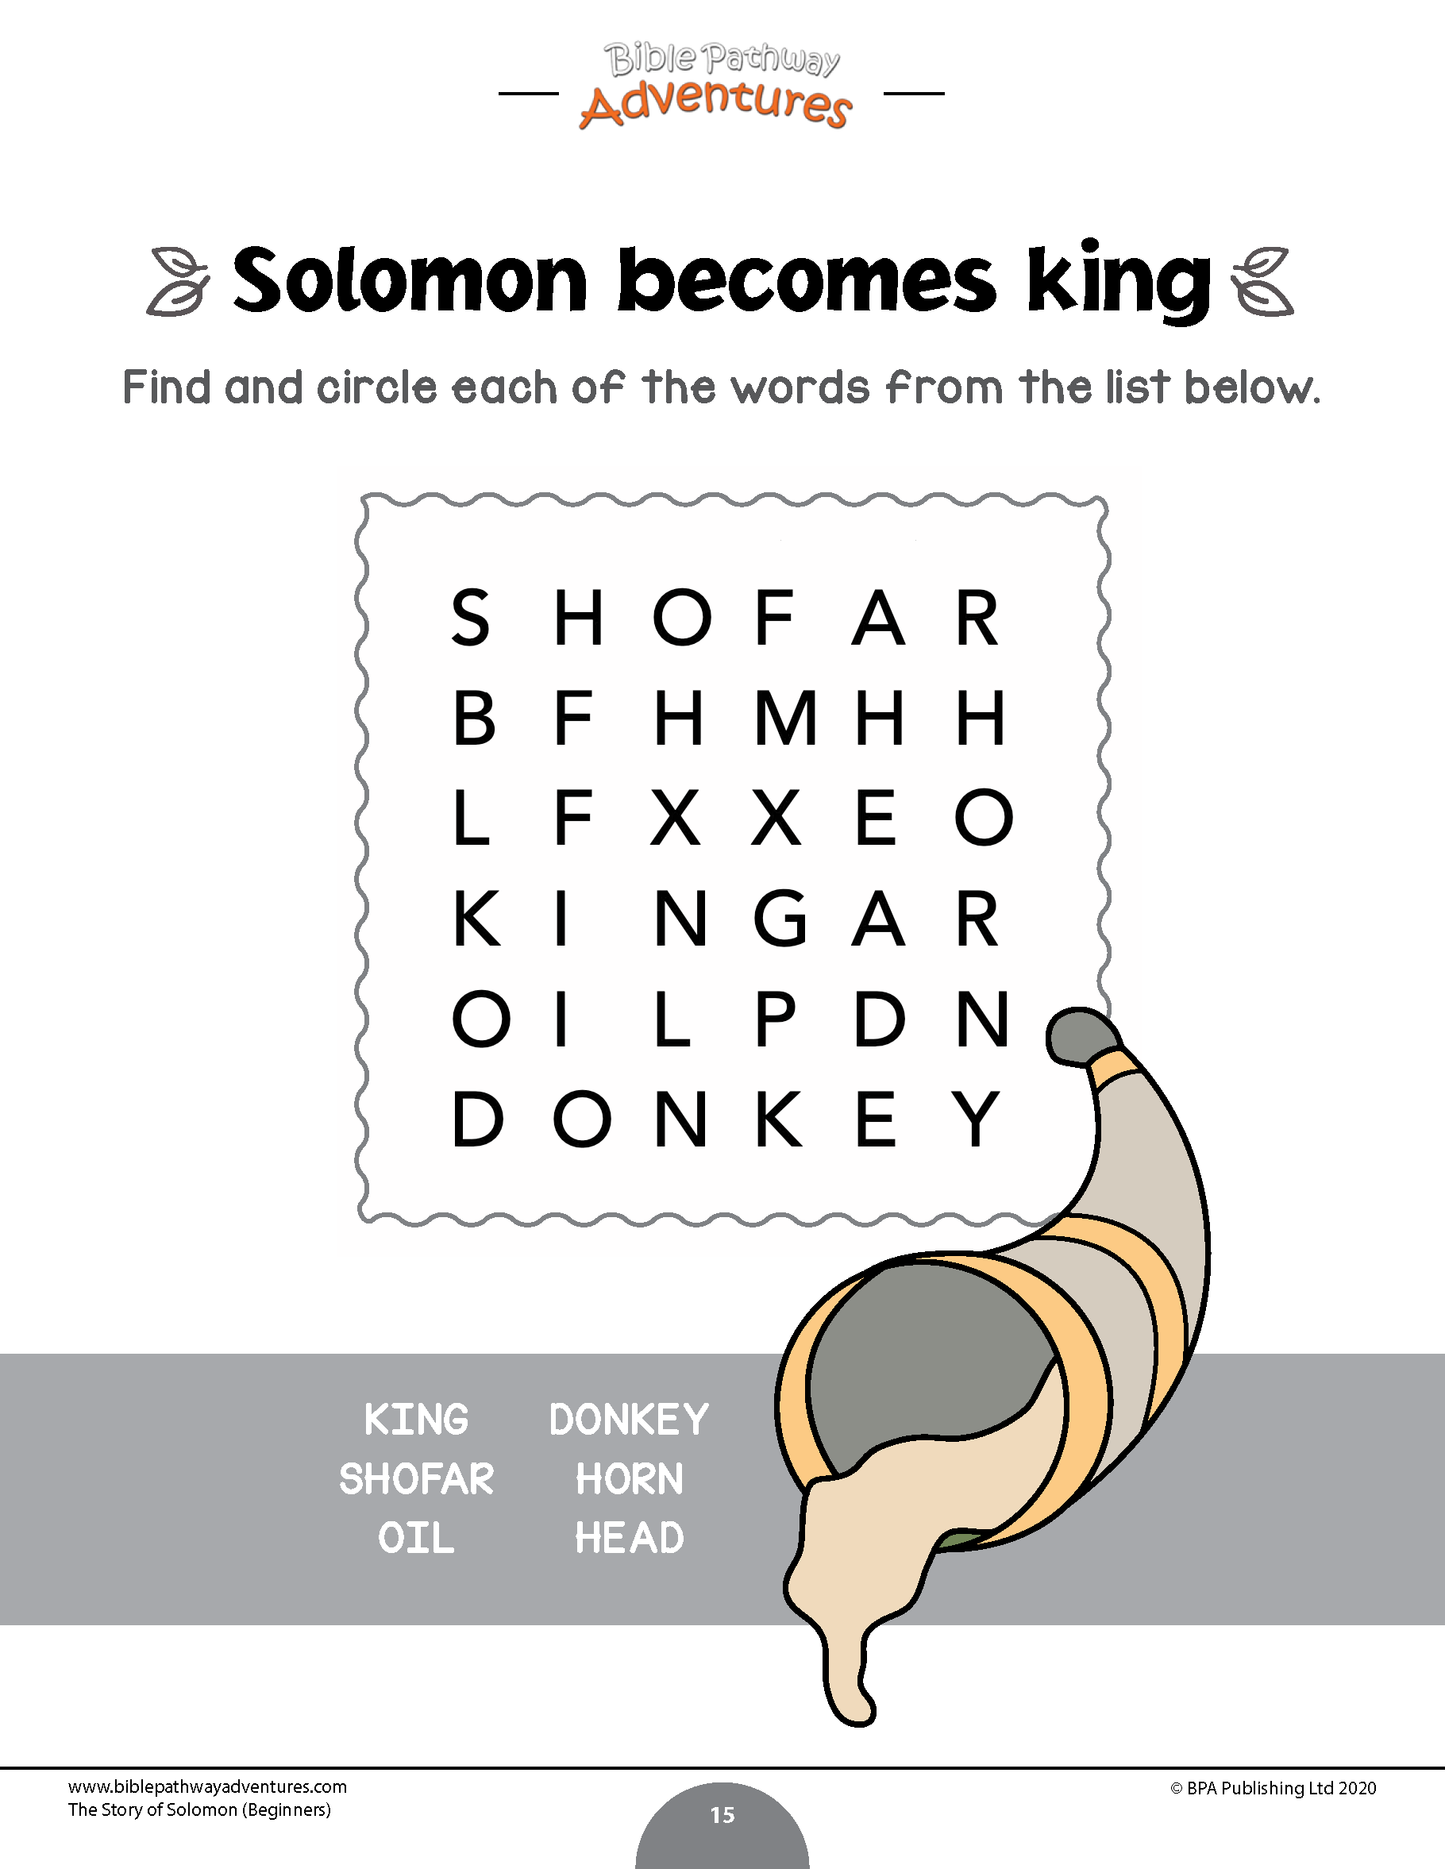 La historia de Salomón Libro de actividades para principiantes